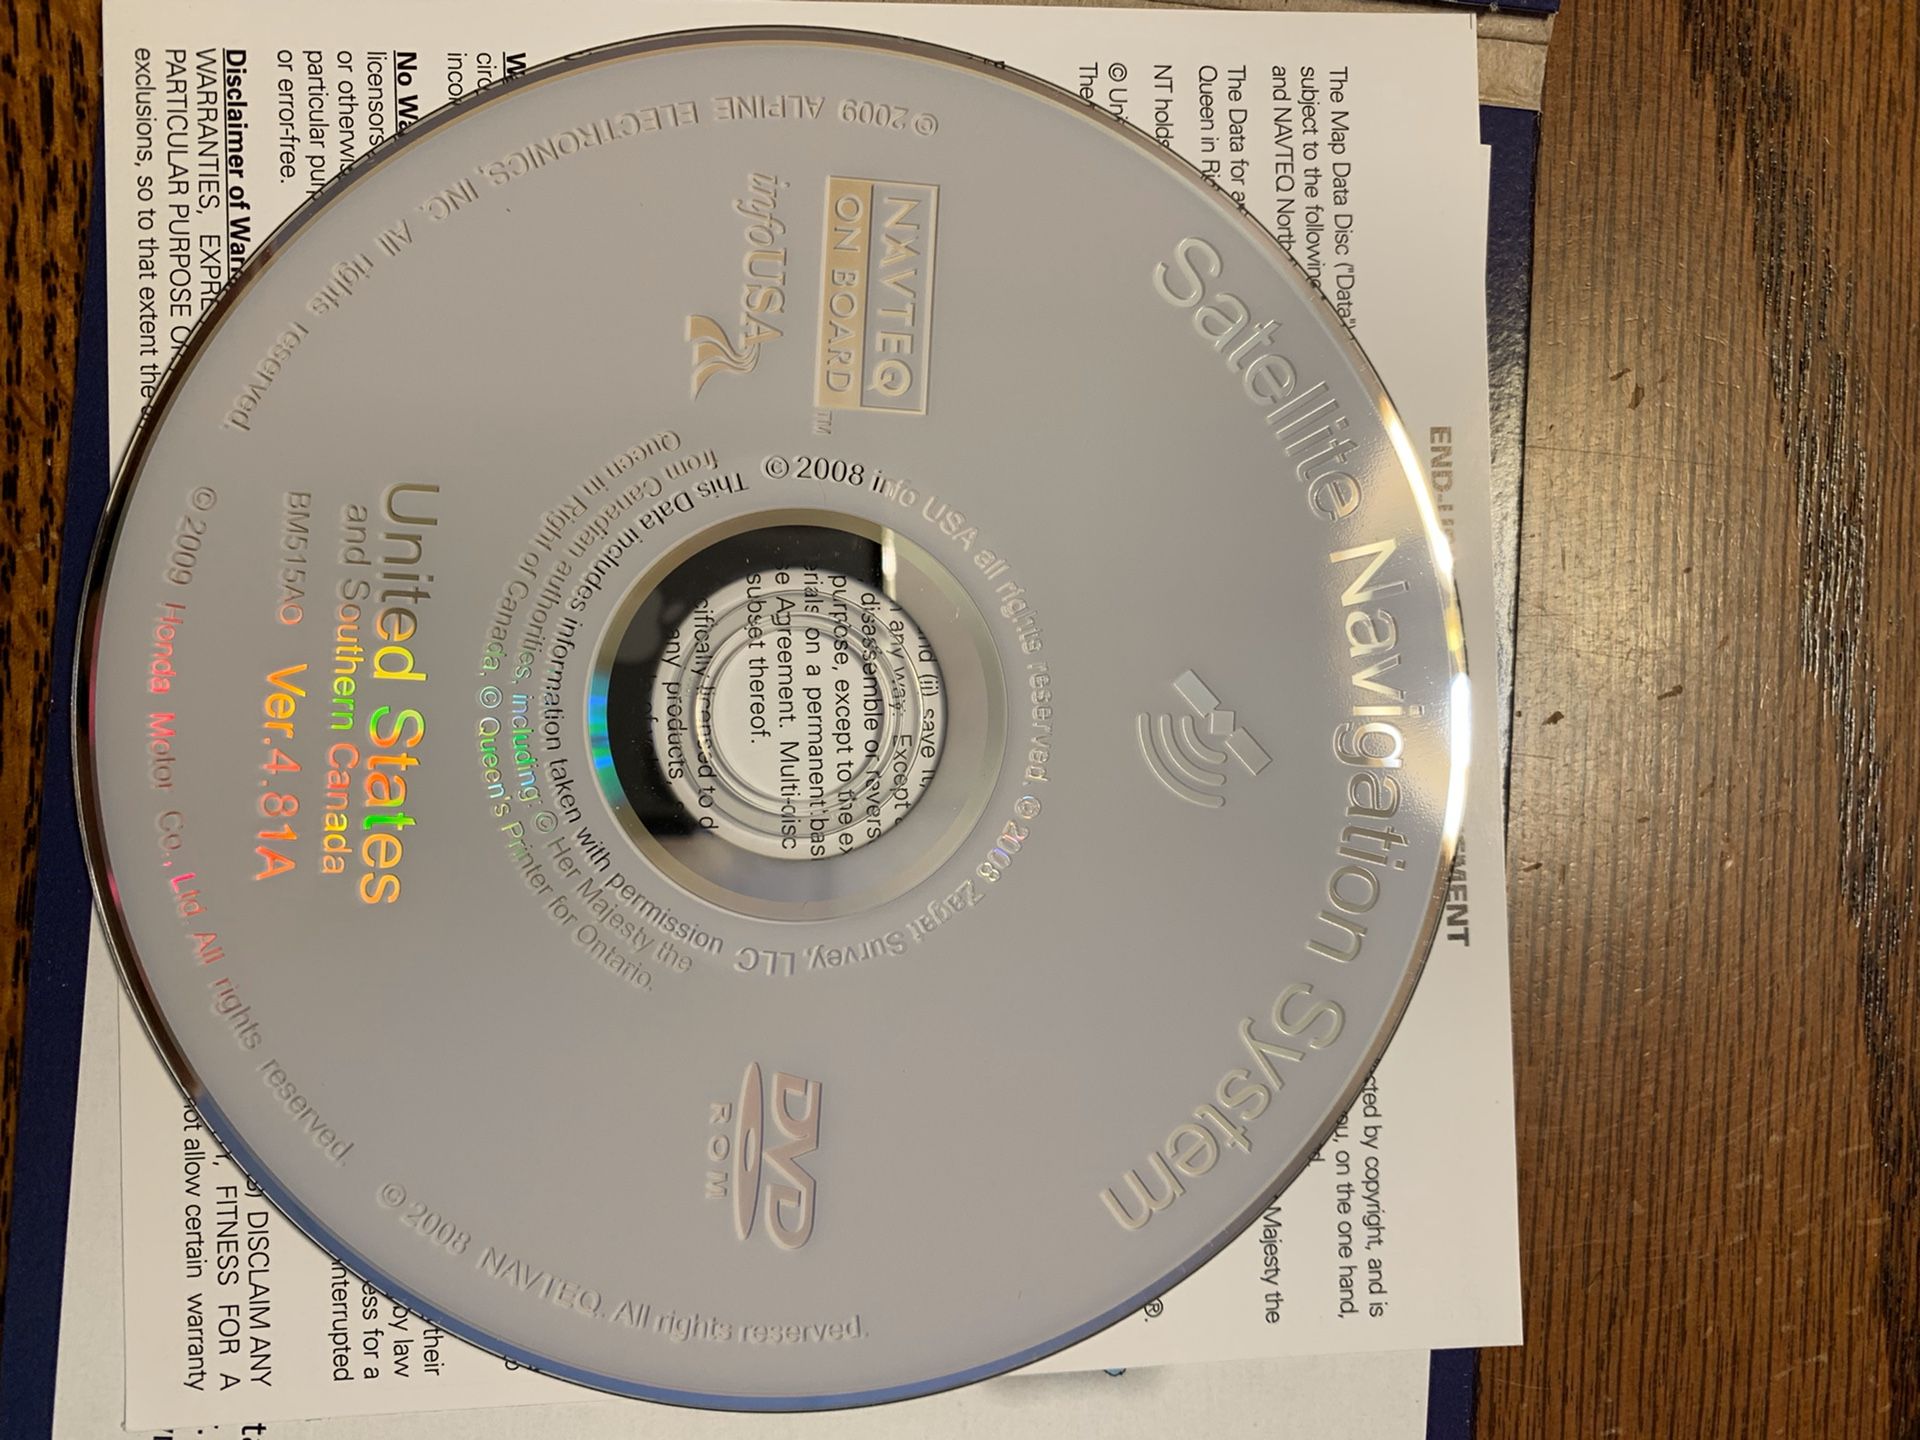 Acura Navigation CD